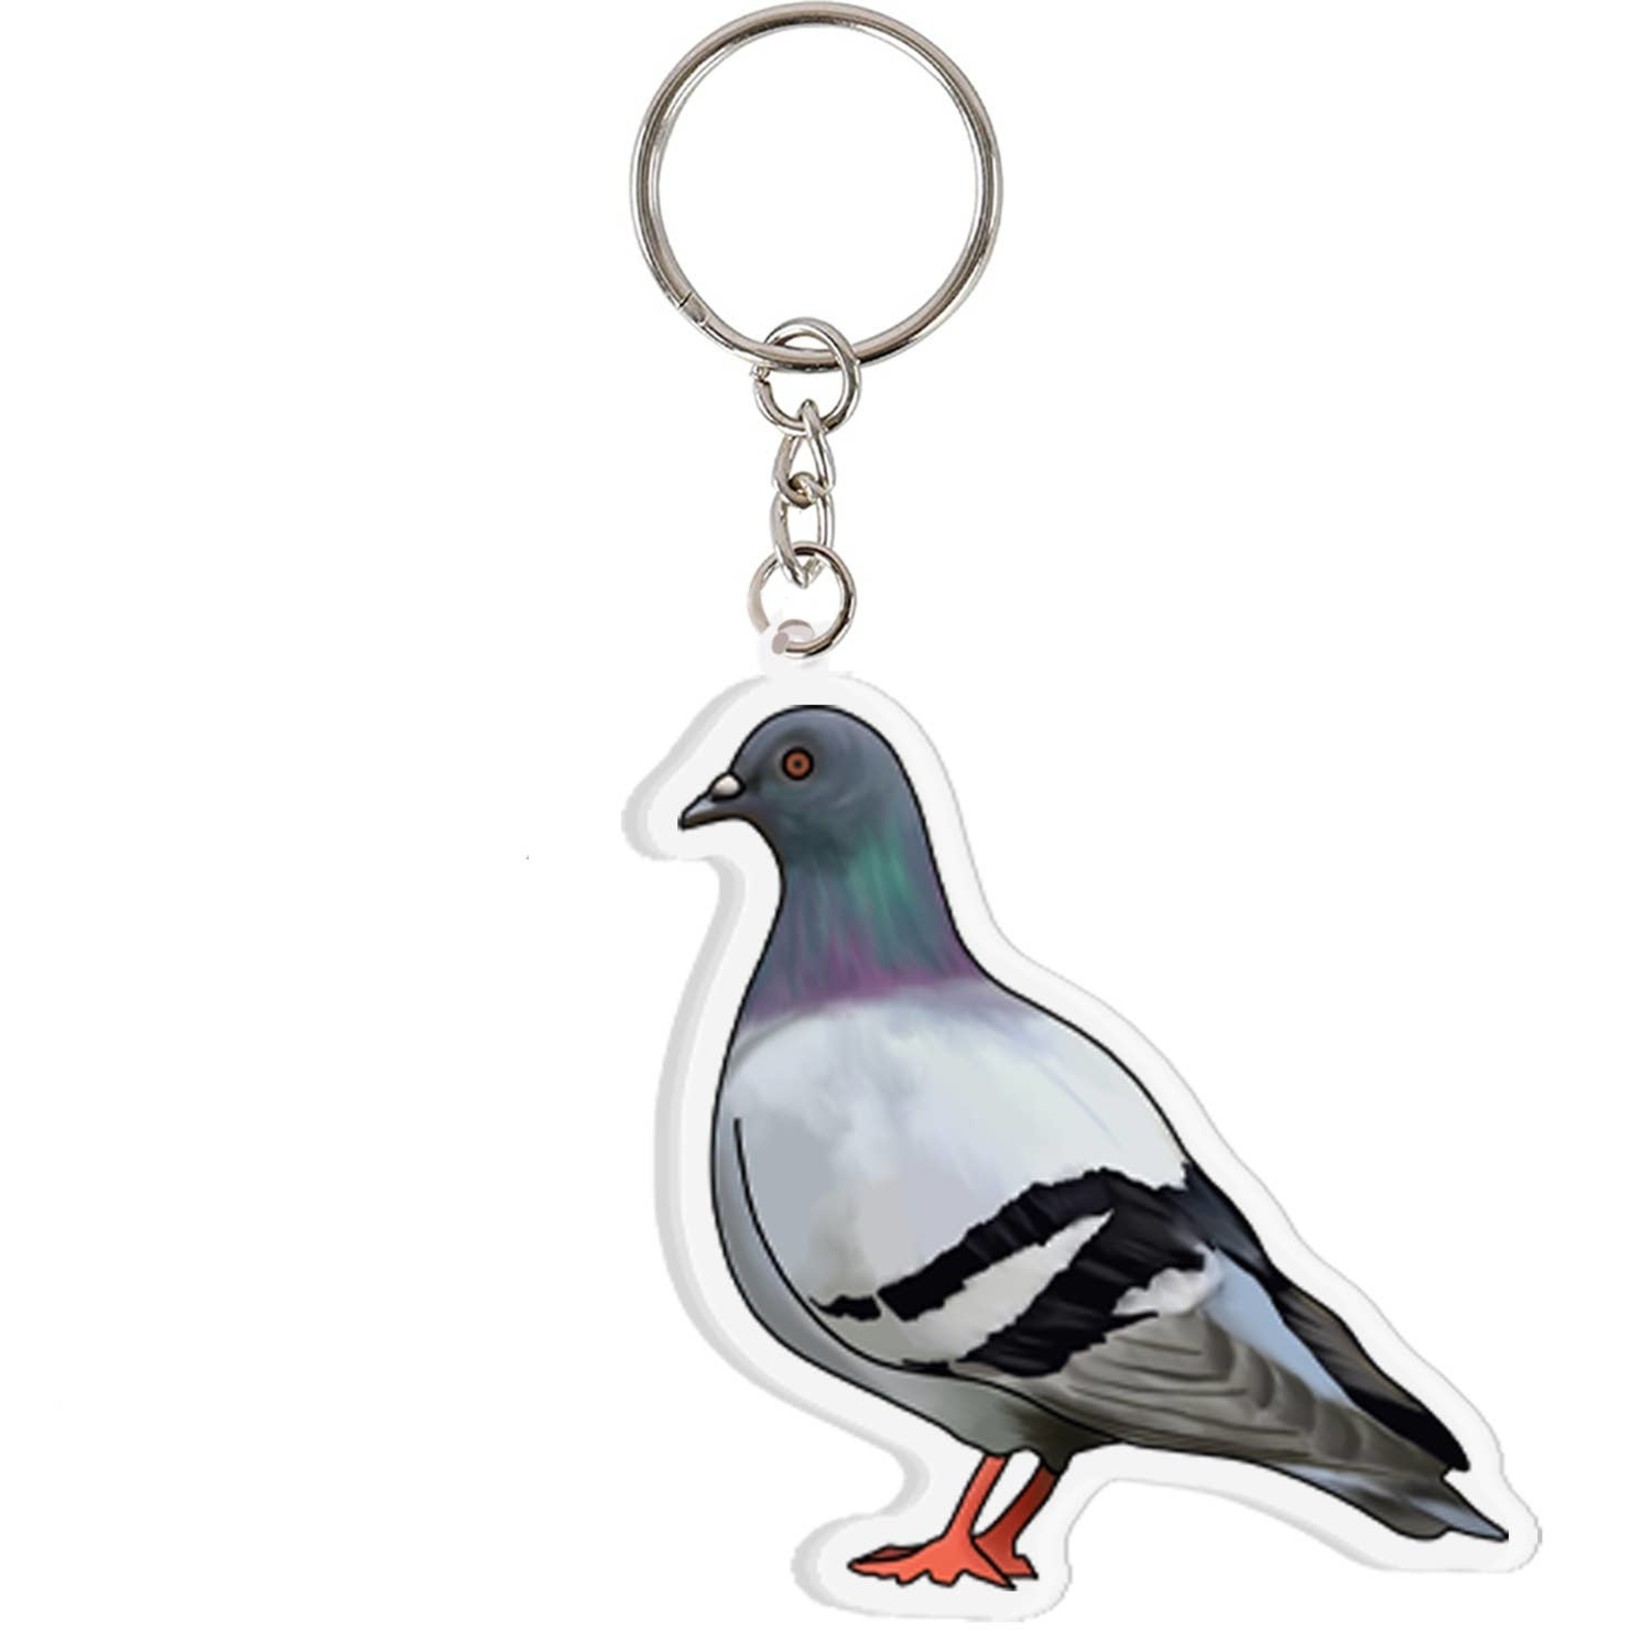 Drawn Goods Drawn Goods New York Pigeon Keychain